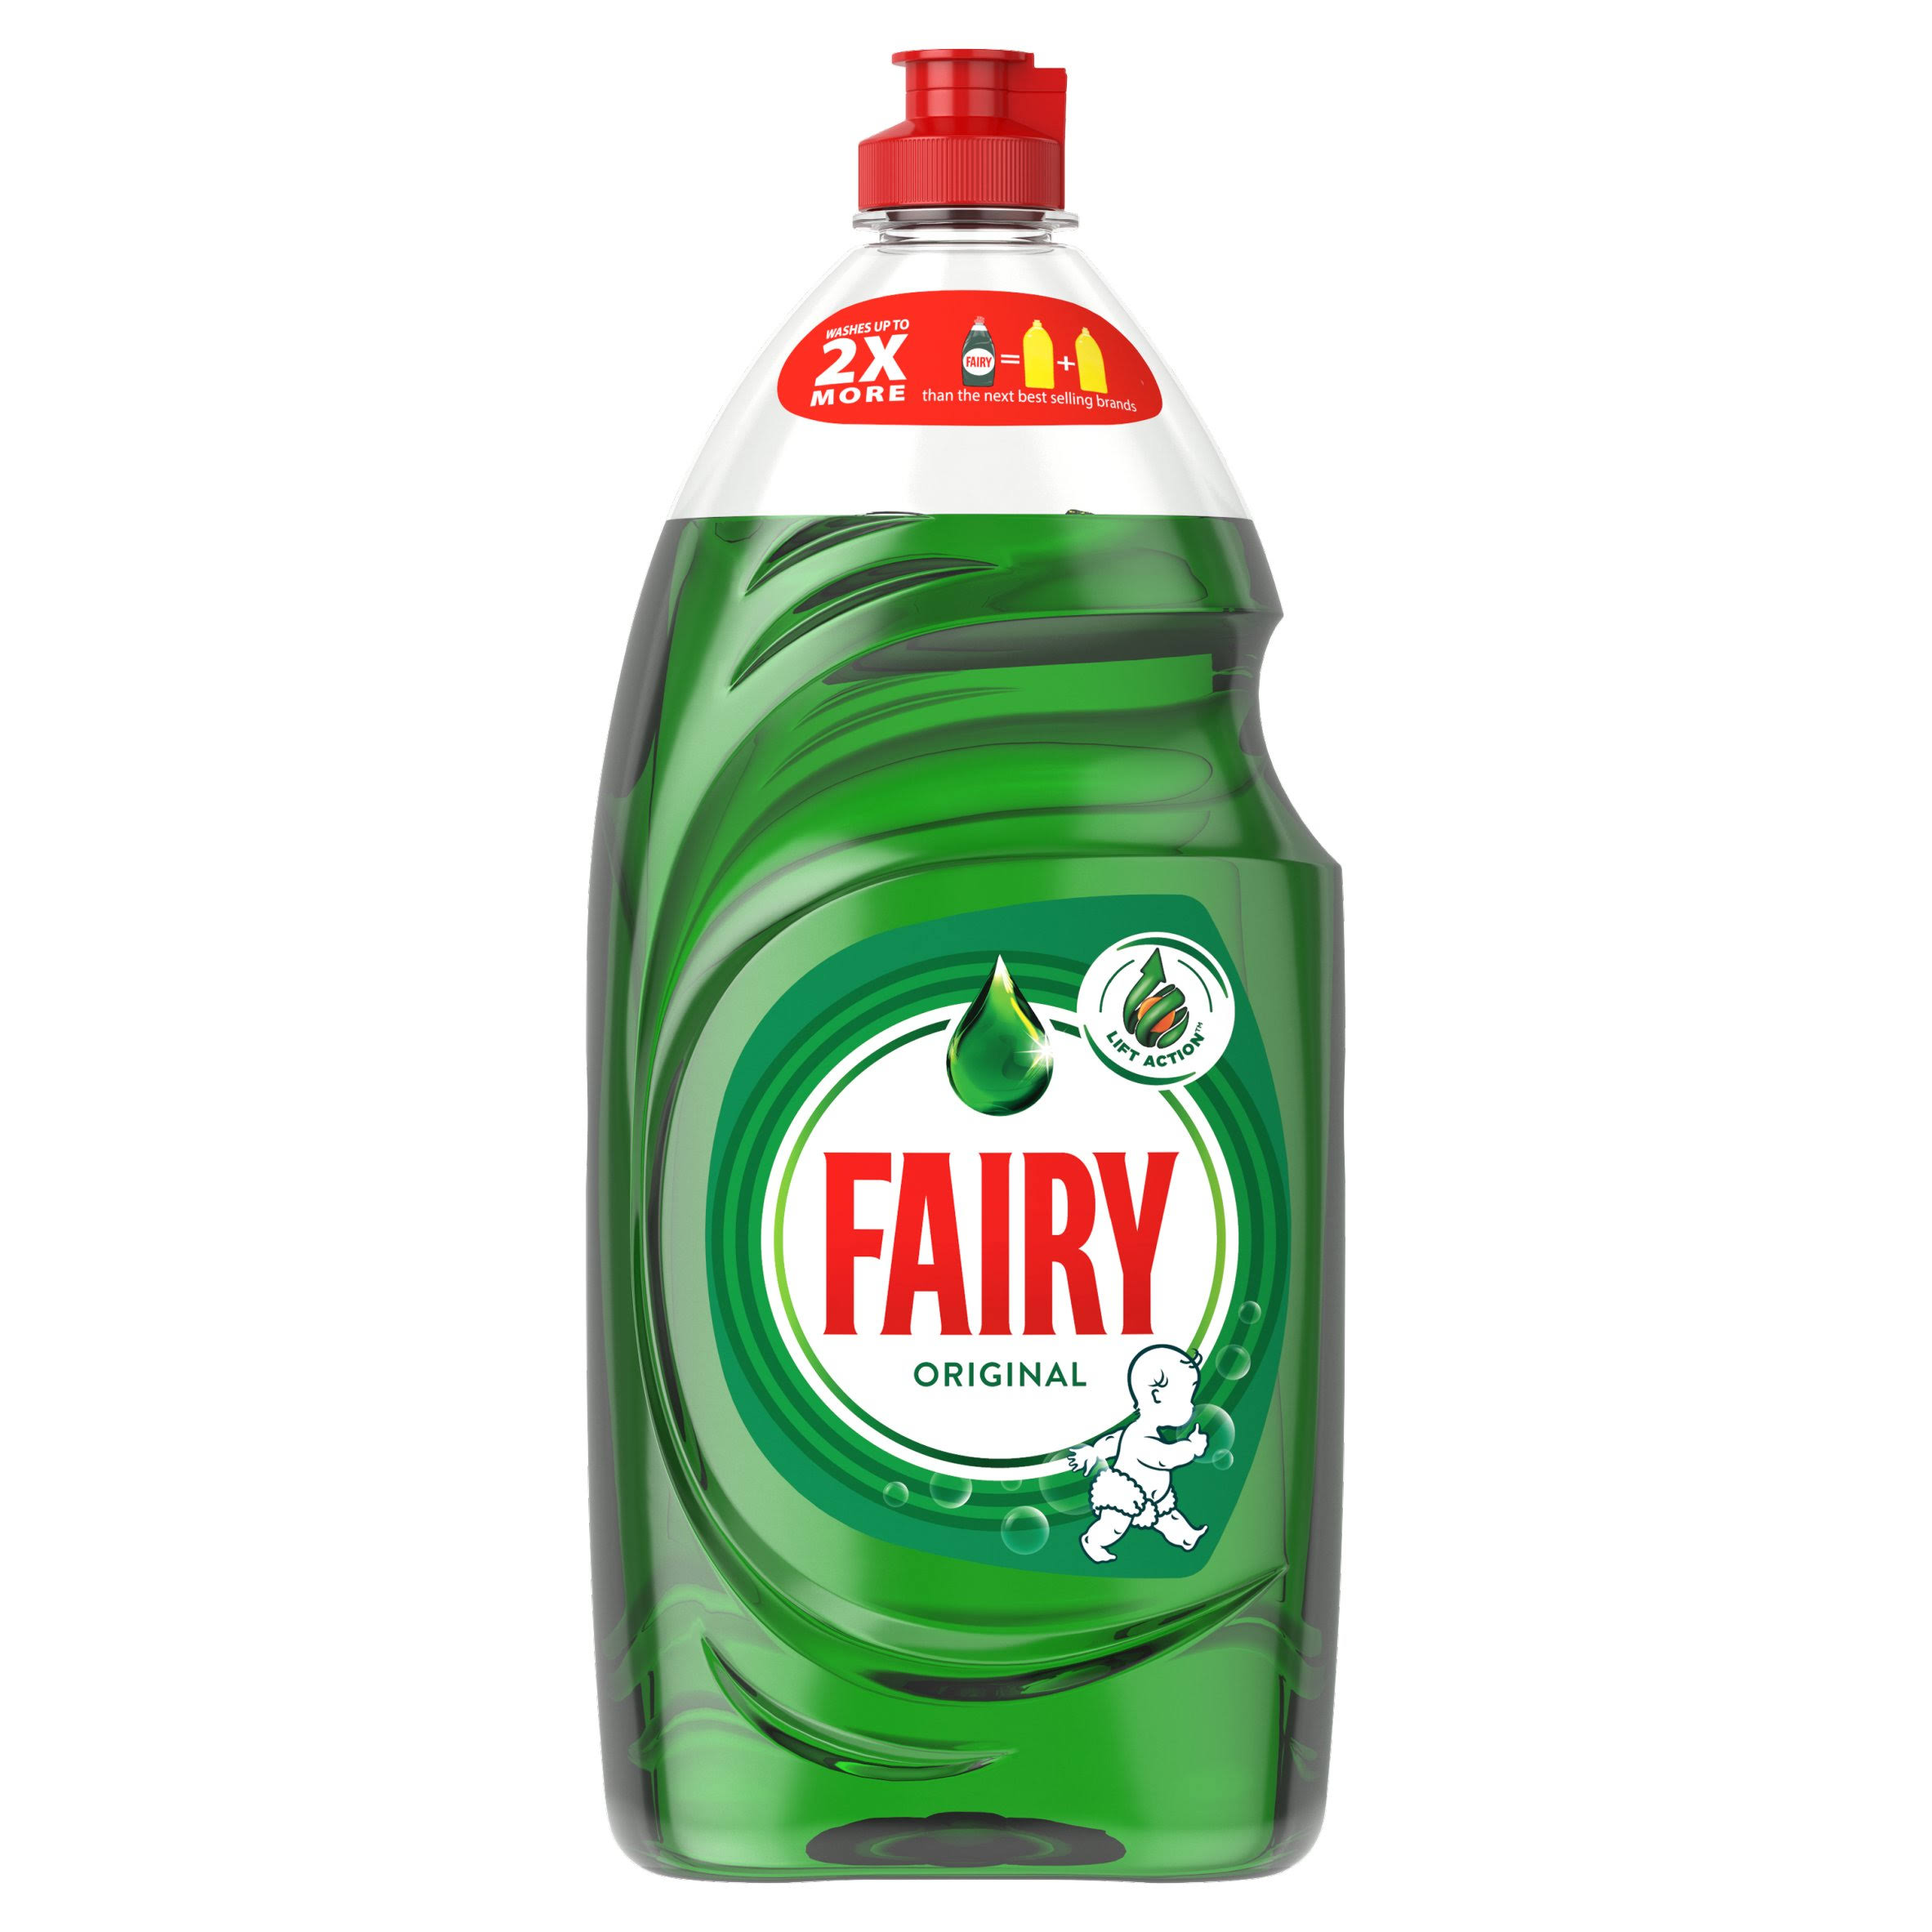 Fairy Original Washing Up Liquid - Dark Green, 1150ml